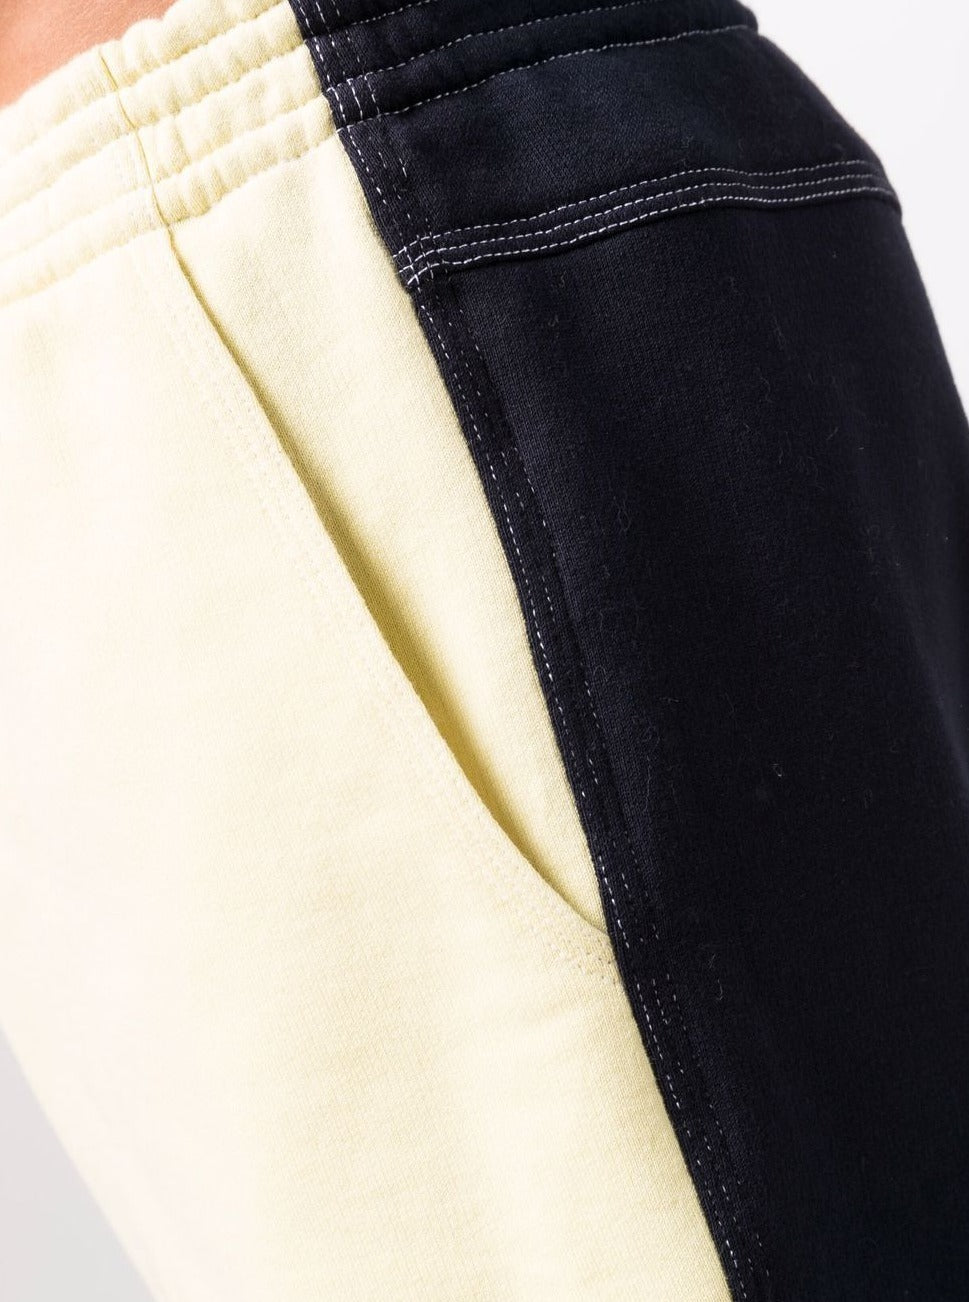 Two-Tone Colour-Block Shorts